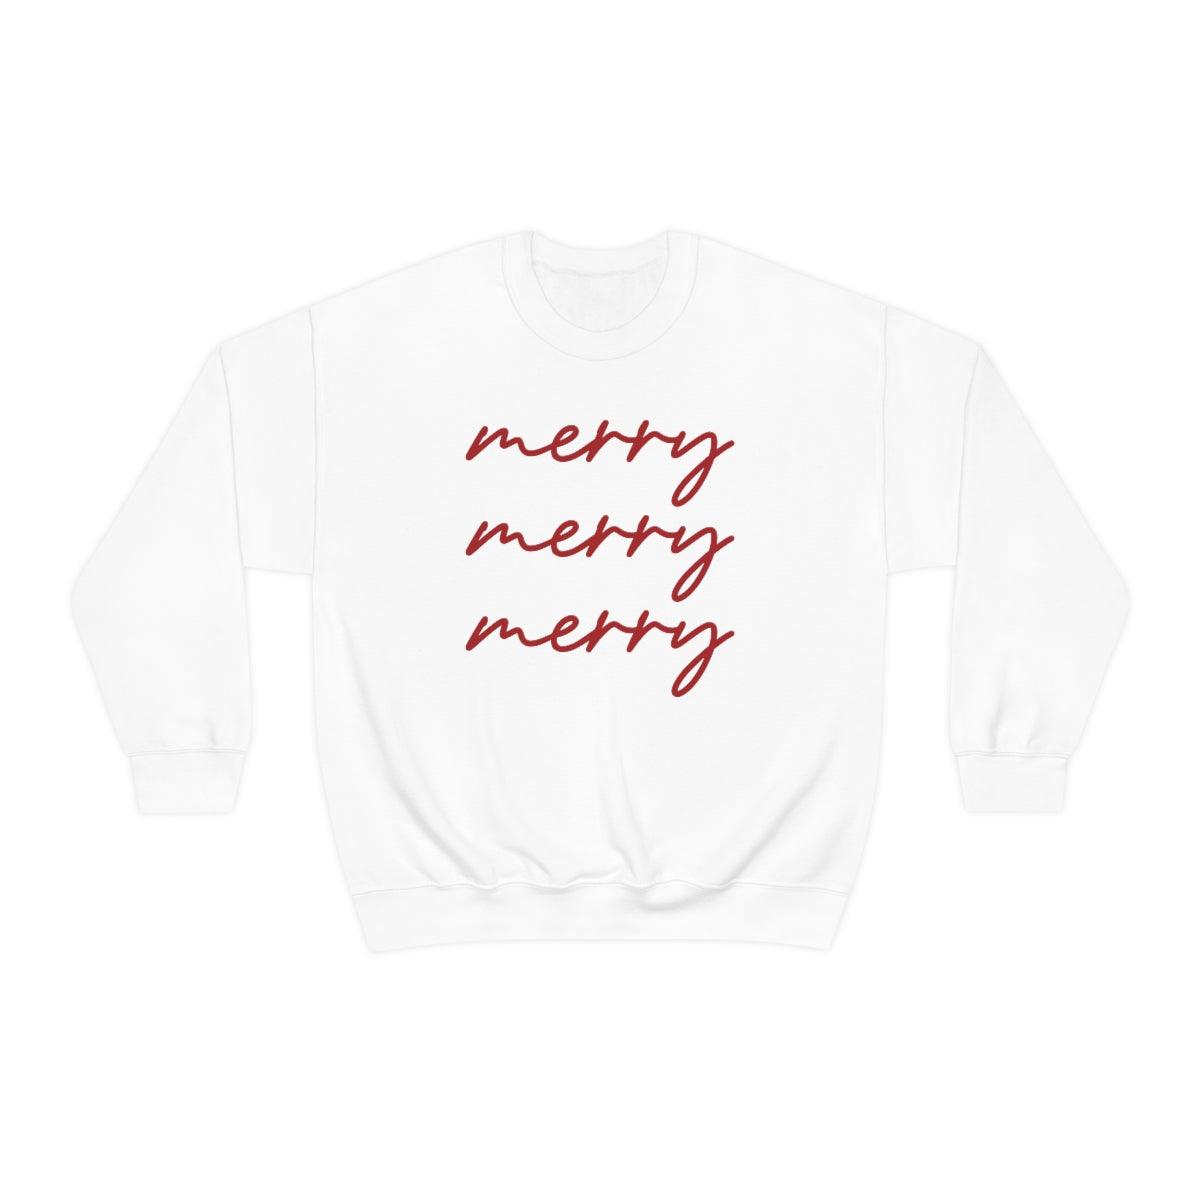 Merry Merry Merry Christmas Crewneck Sweatshirt - Crystal Rose Design Co.